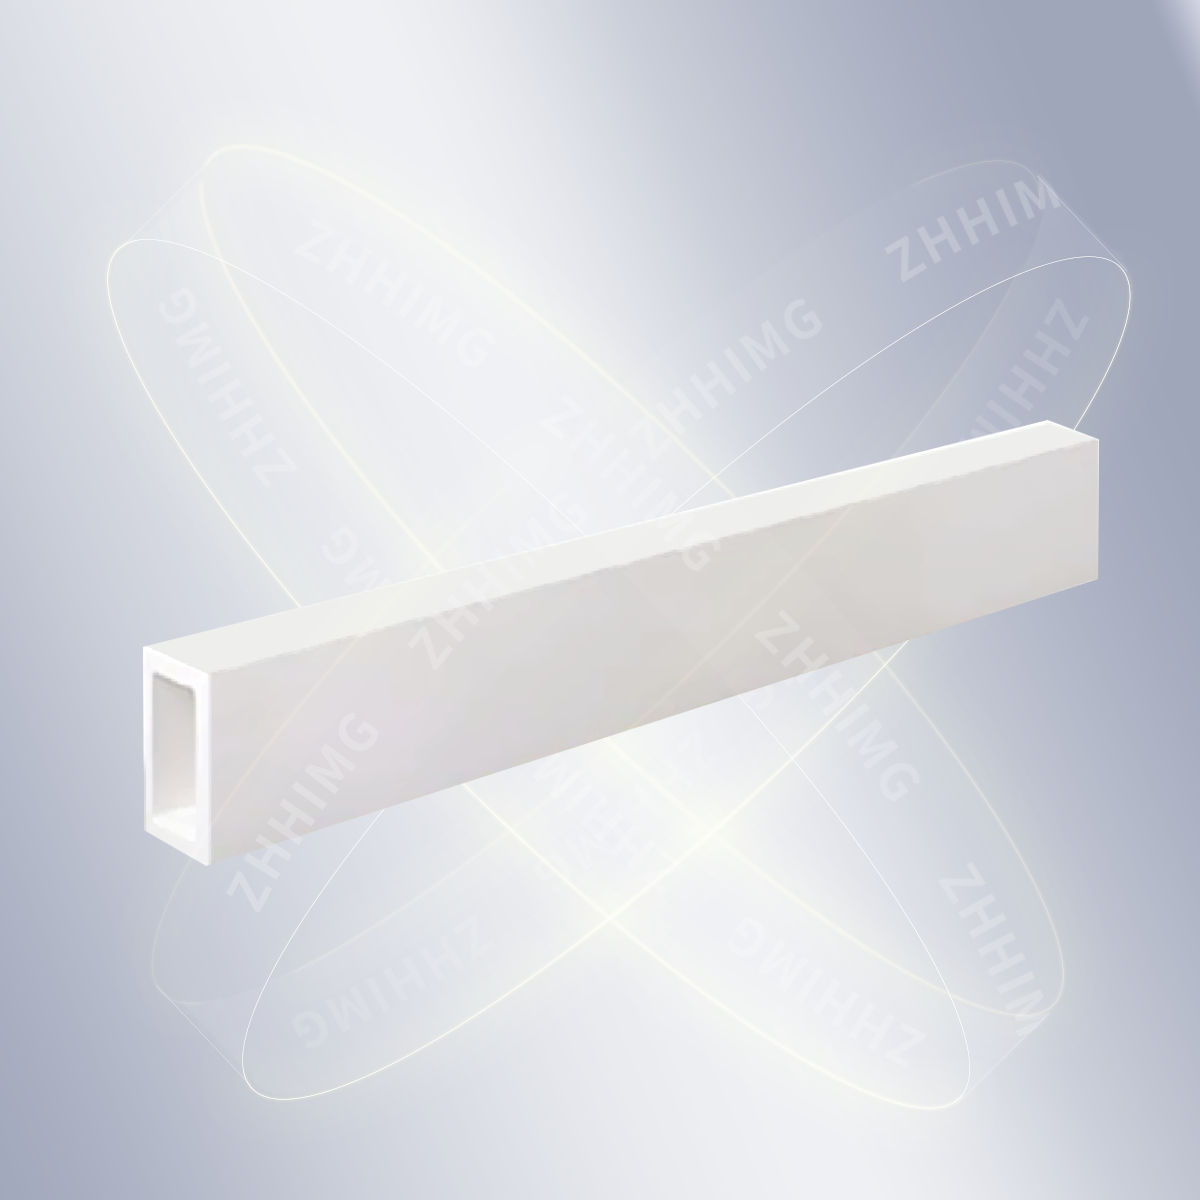 China Factory for Ceramic Straight Edge - Precision Ceramic Straight Ruler – ZHONGHUI